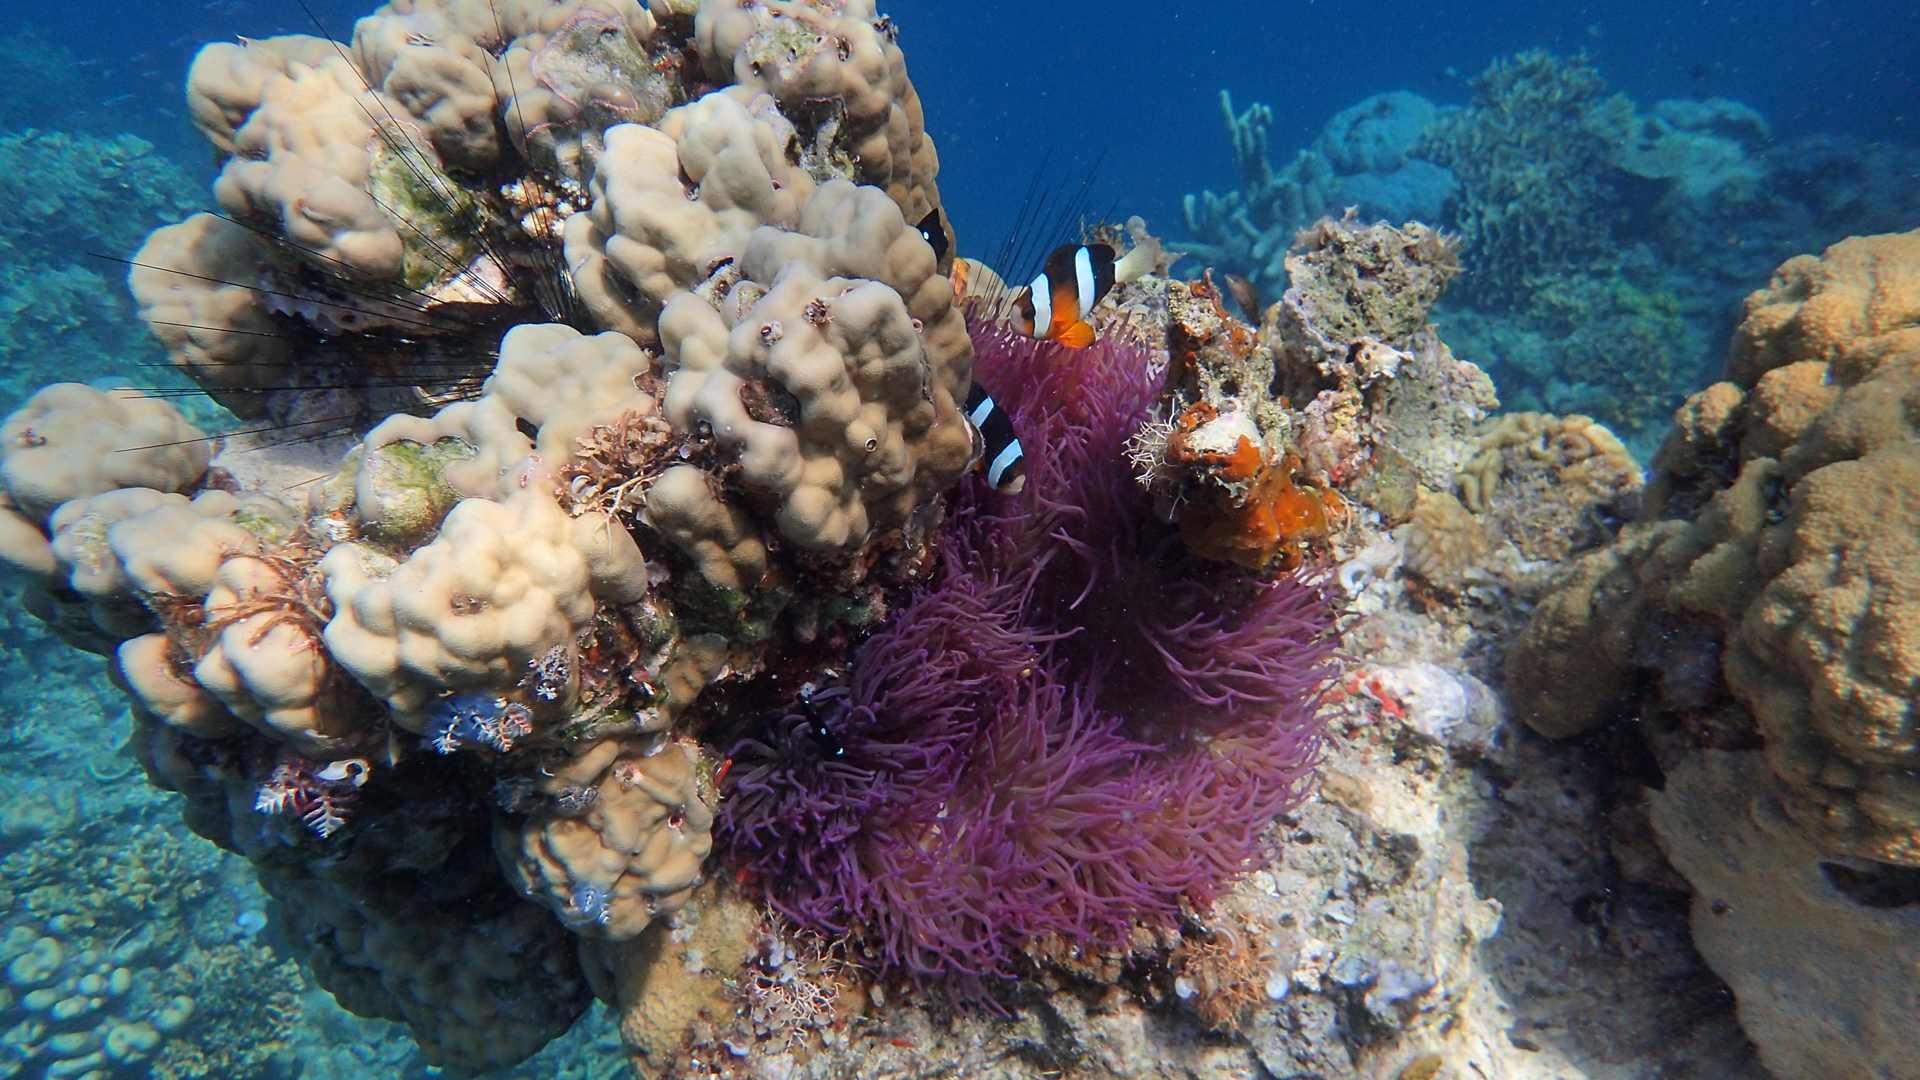 Amphiprion clarkii (Clark's clownfish) and Heteractis crispa (rare purple sebae anemone), Apulit Island, Taytay Bay, Palawan, Philippines.